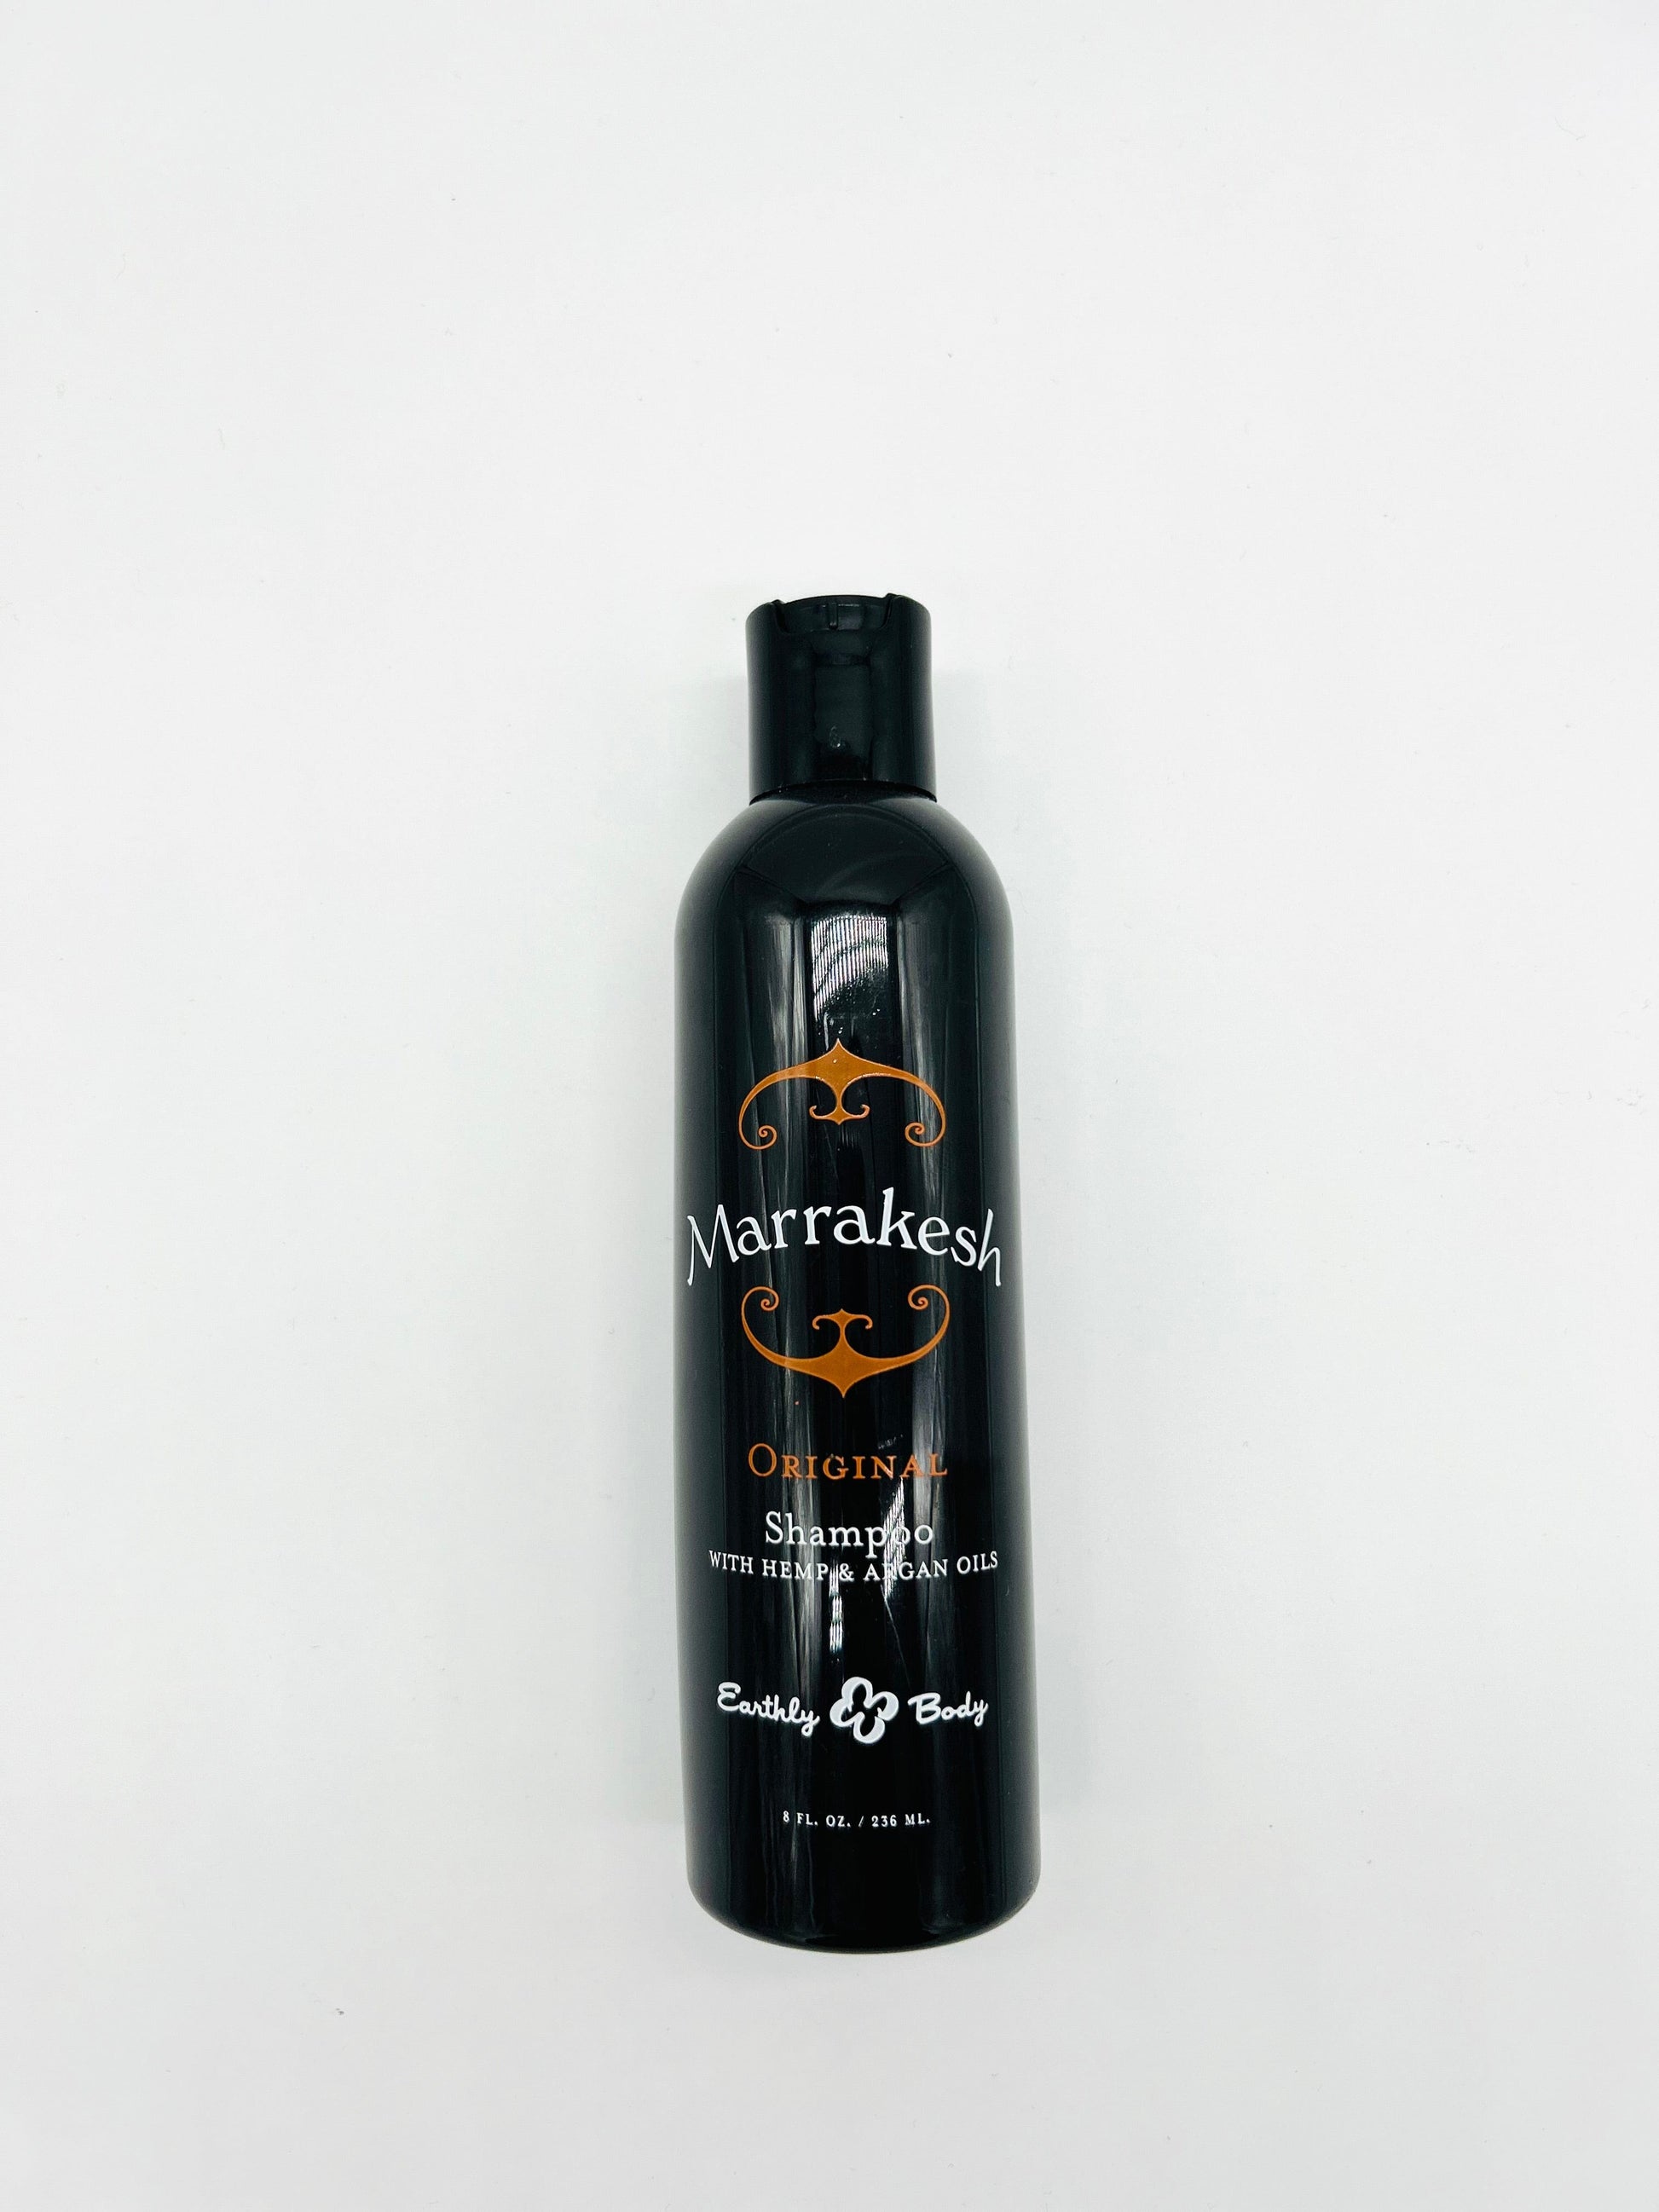 Argan Oil Shampoo Earthly Body Marrakesh Original Scent with Hemp  8 oz Shampoo